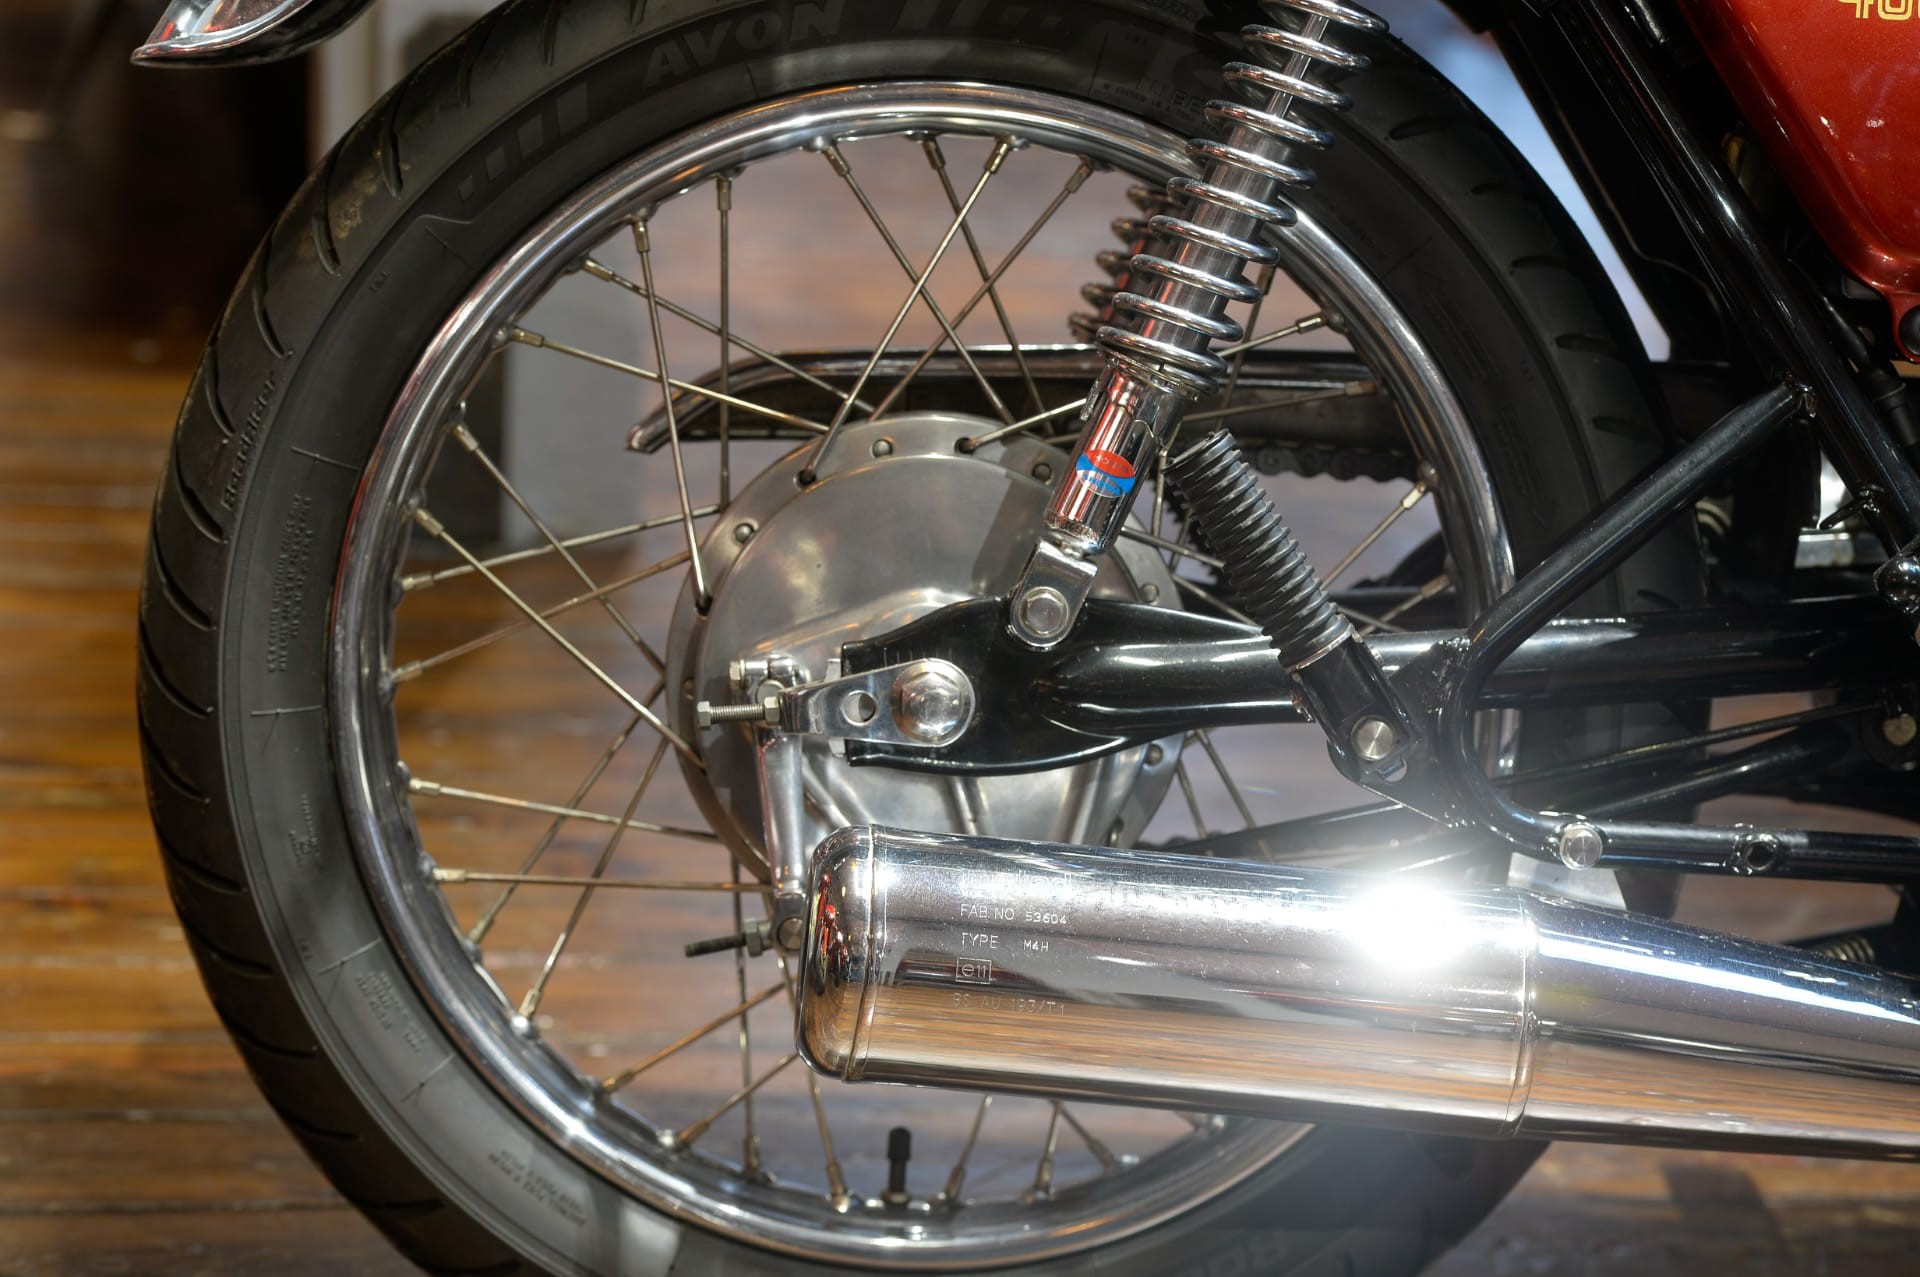 Honda CB400 | The Bike Specialists | South Yorkshire